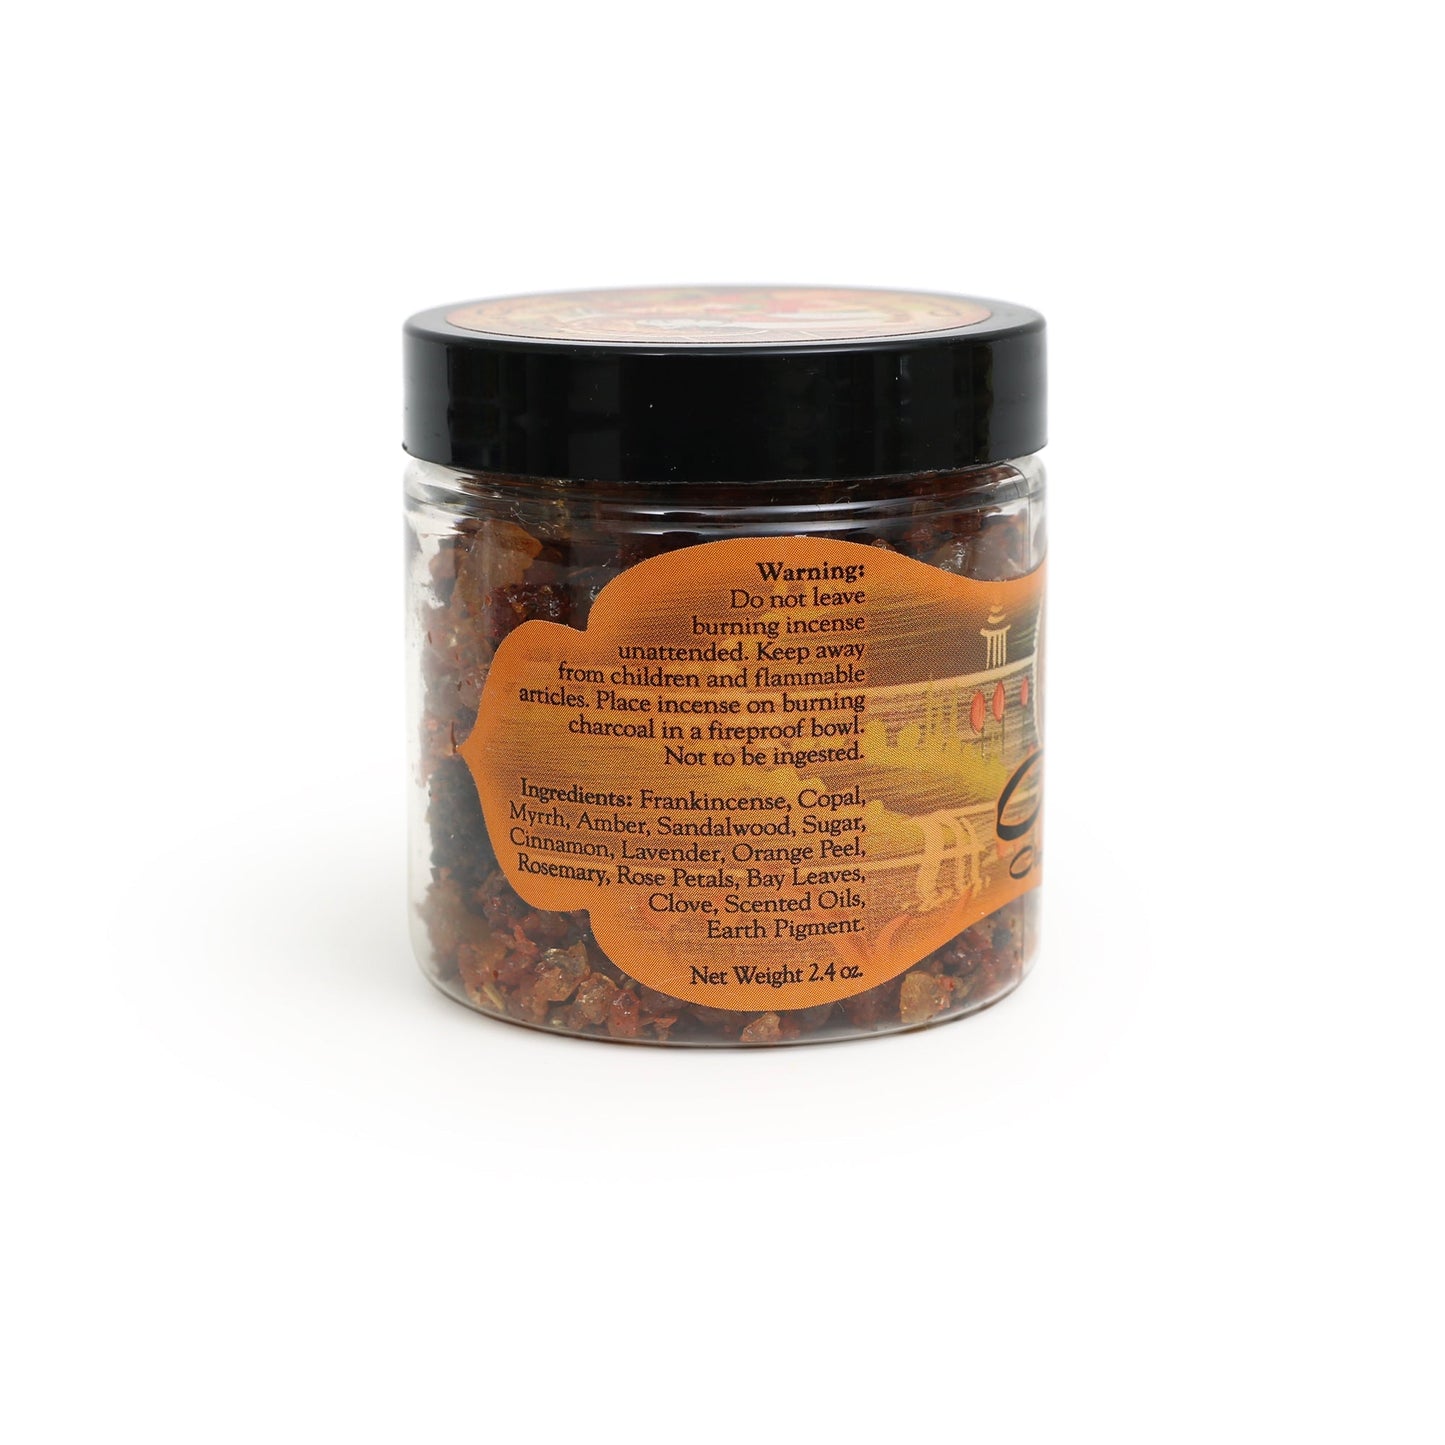 Resin Incense Ananda - Clearing Negativity - 2.4oz jar - Tree Spirit Wellness